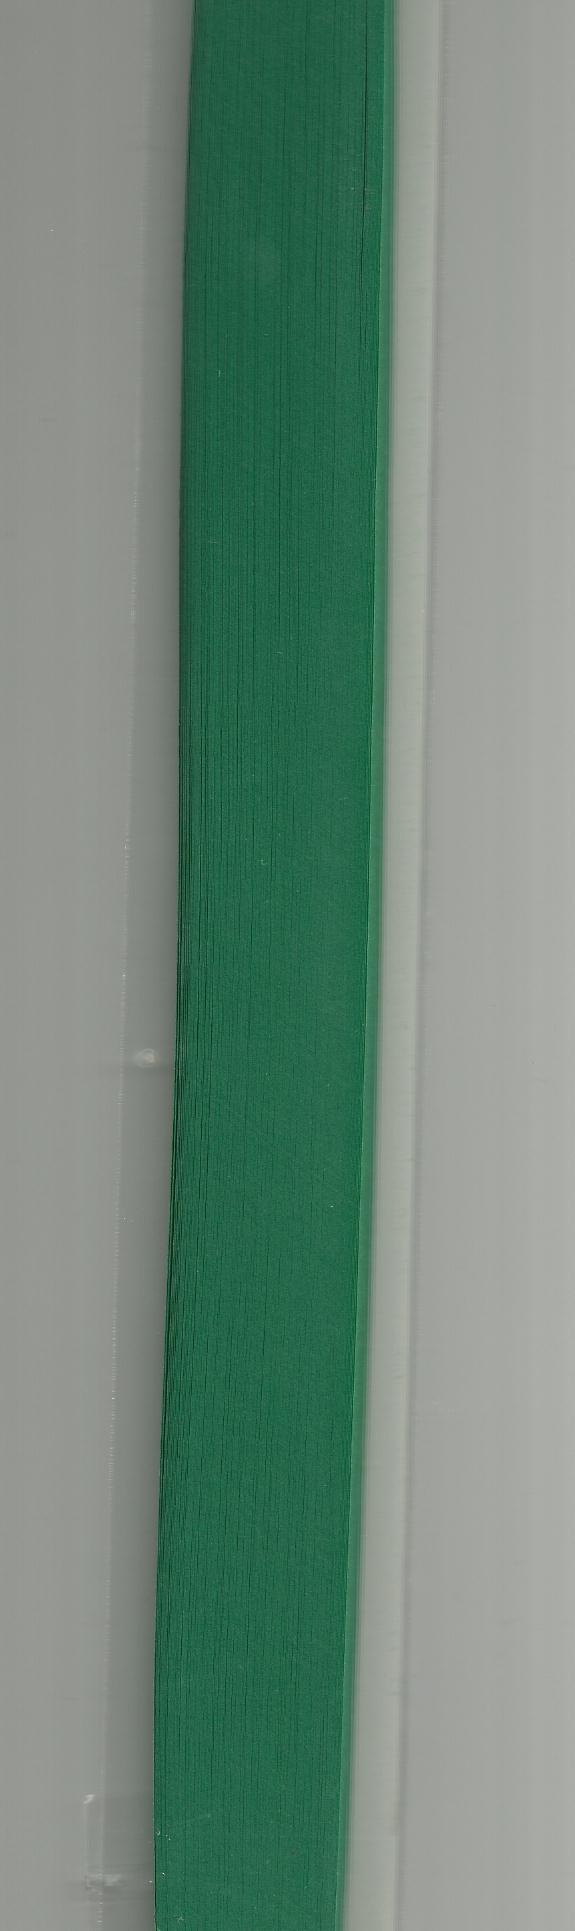 зеленый моз набор для квиллинга